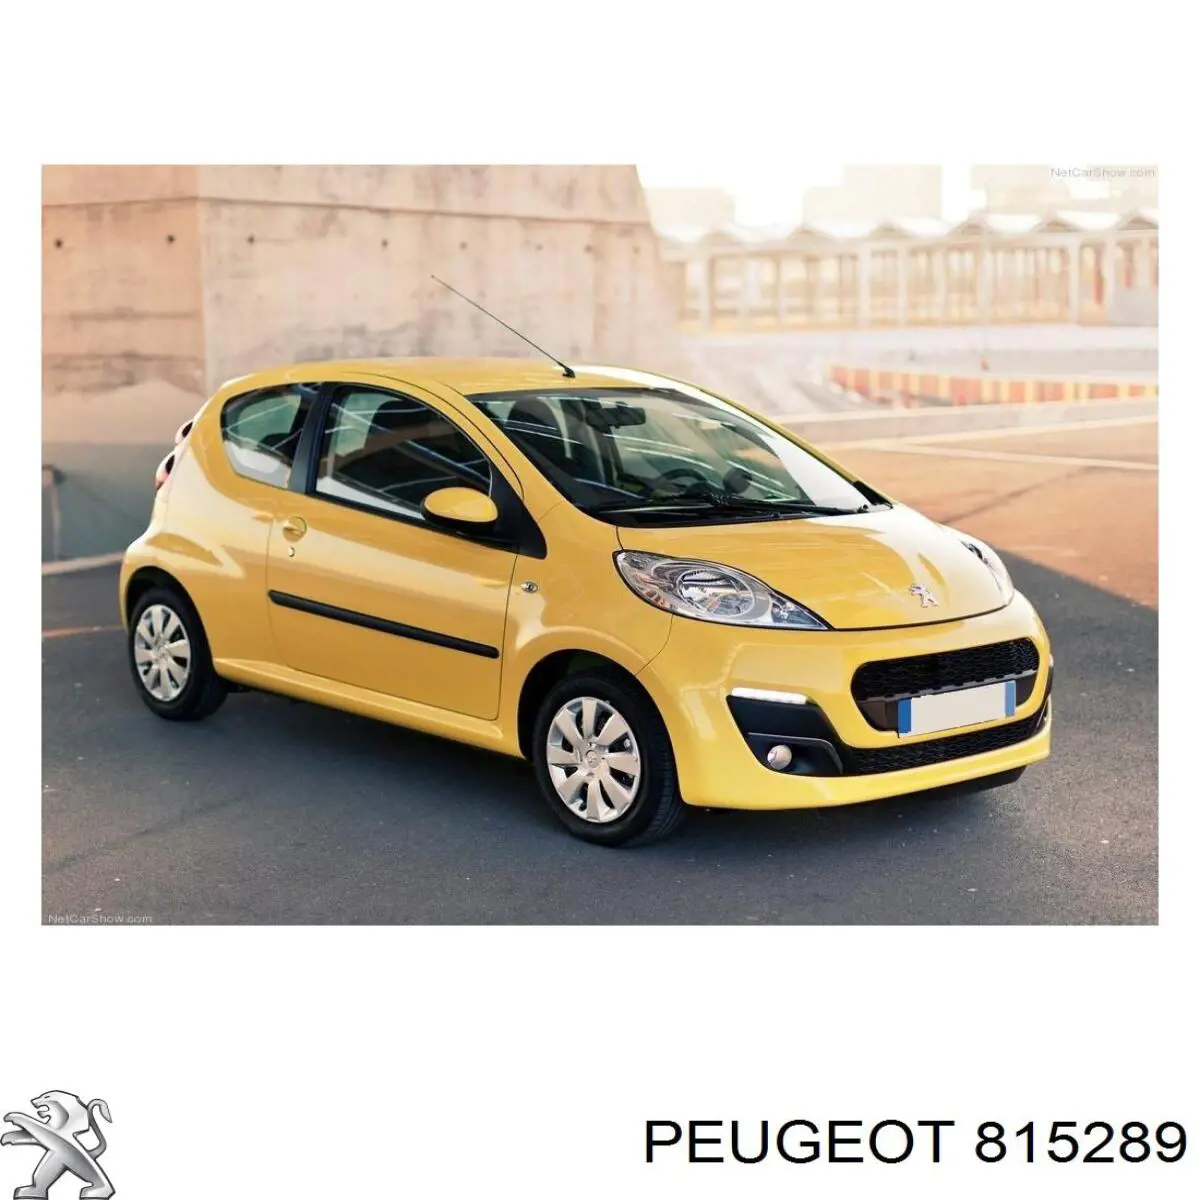 815289 Peugeot/Citroen cubierta de espejo retrovisor derecho